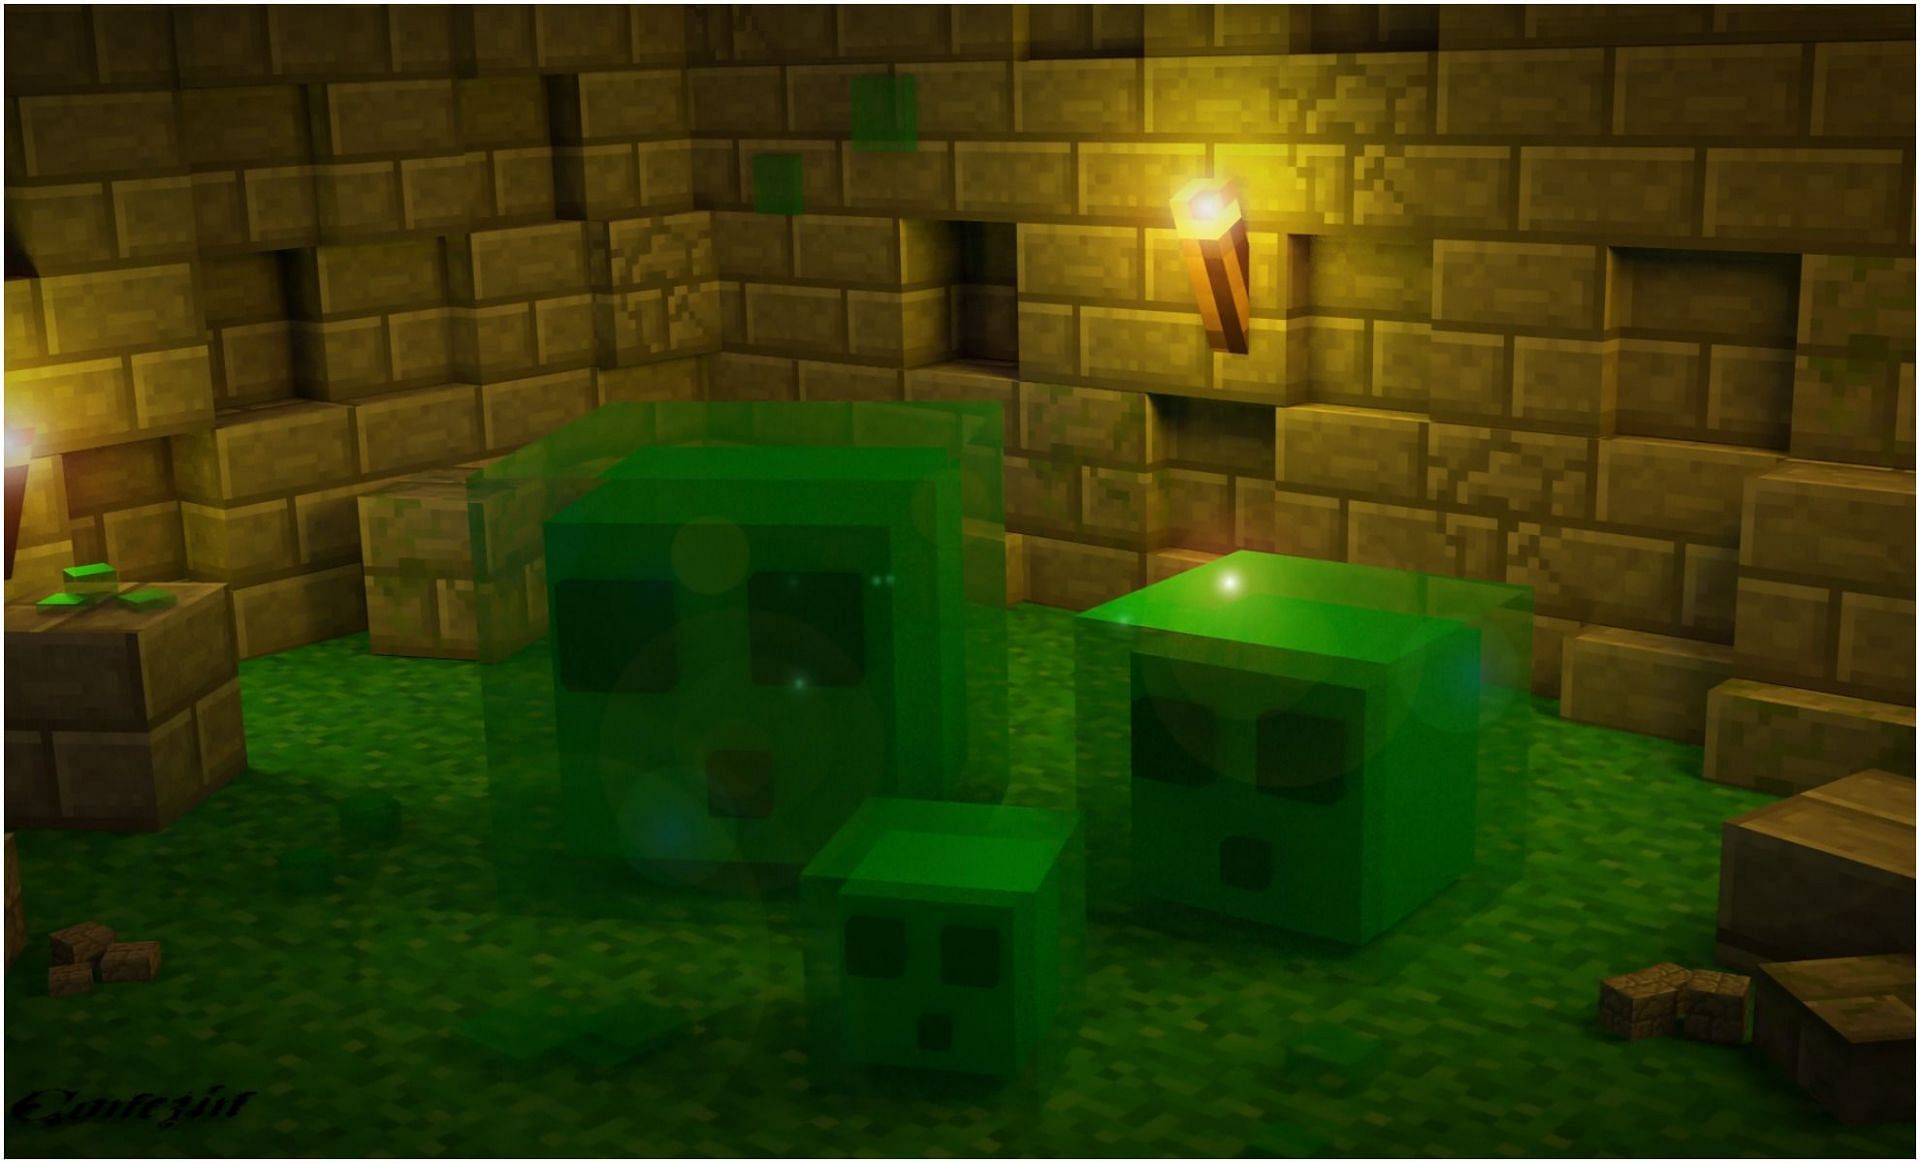 Slimes in Minecraft (Image via WallpaperAbyss/Minecraft)